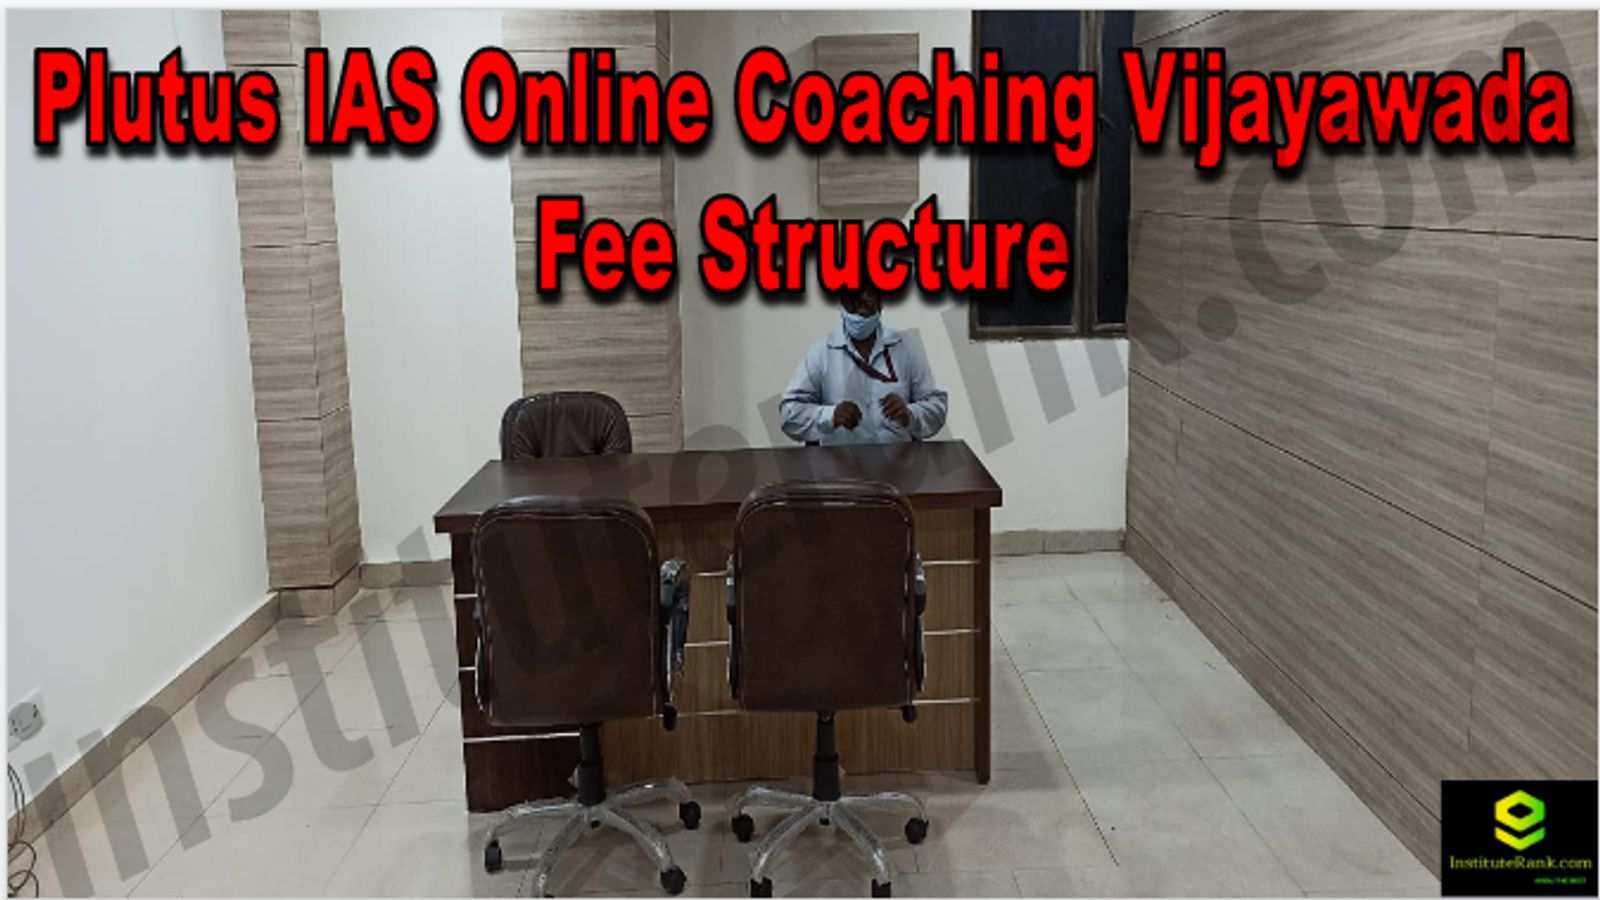 Plutus IAS Online Coaching Vijayawada Reviews Fee Structure